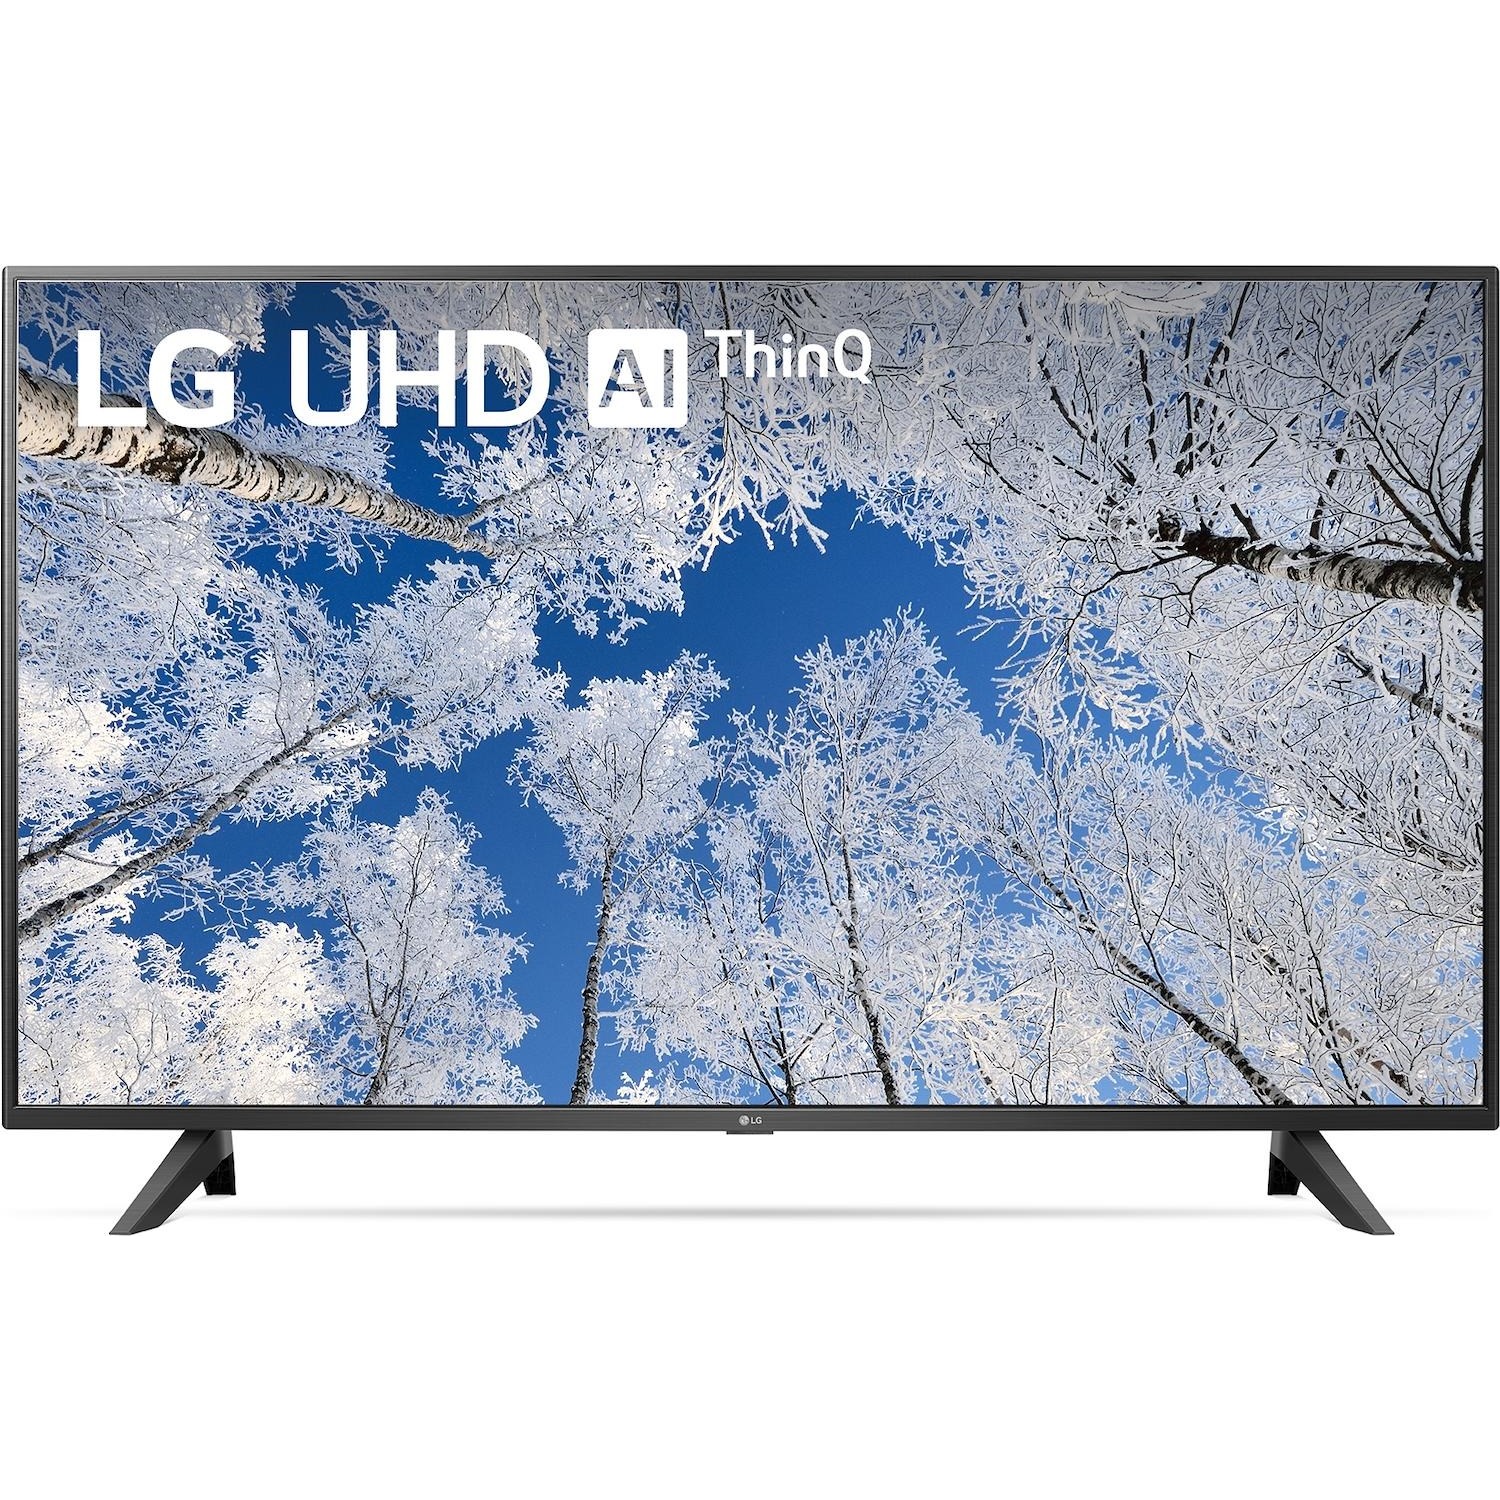 Immagine per TV LED LG 55UQ70006 Calibrato 4K e FULL HD da DIMOStore